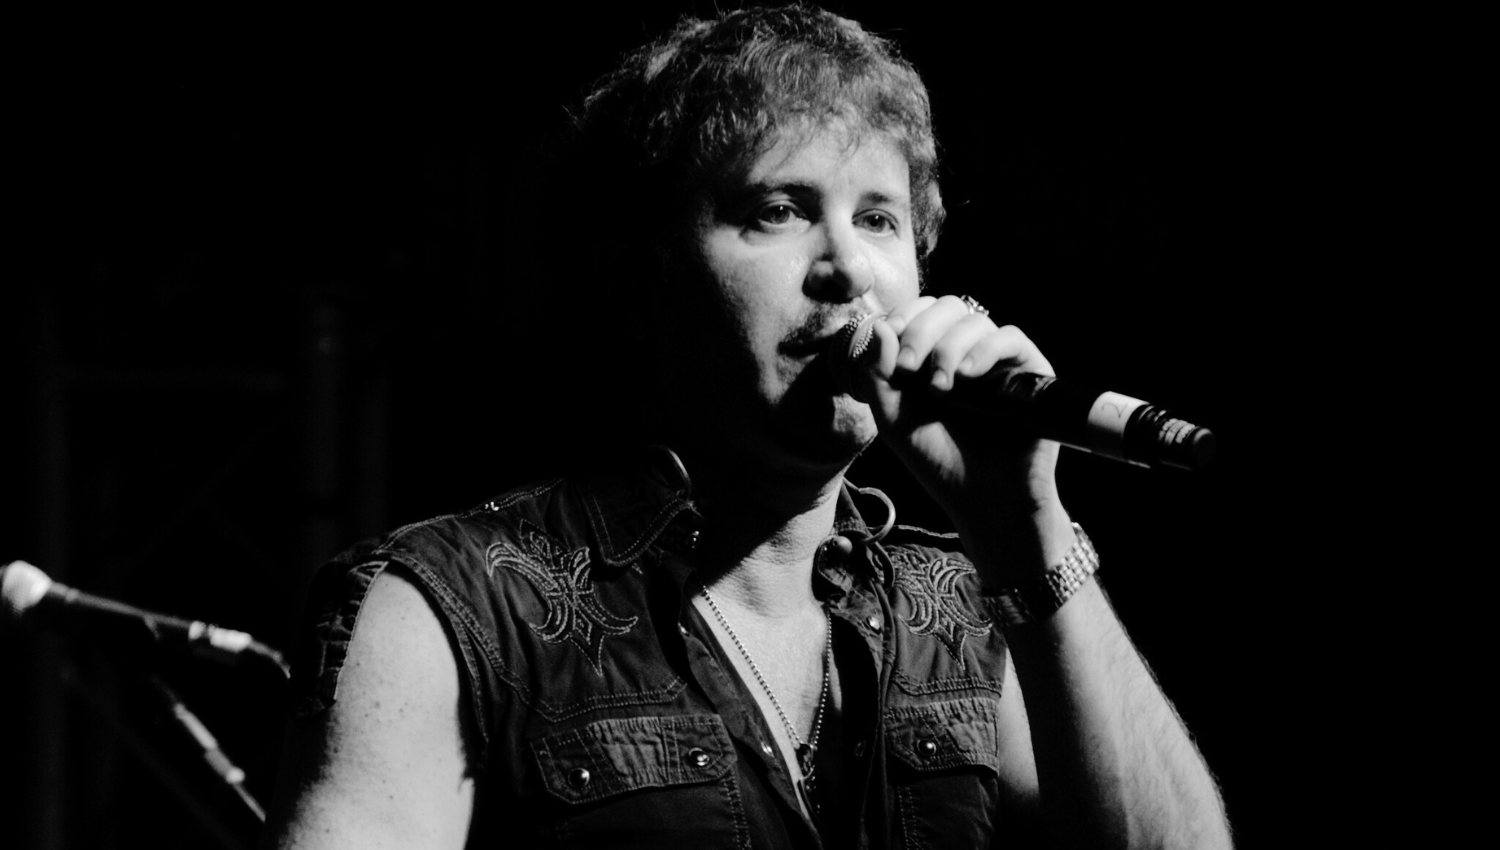 Preminuo C.J. Snare, jedan od osnivača rock benda Firehouse